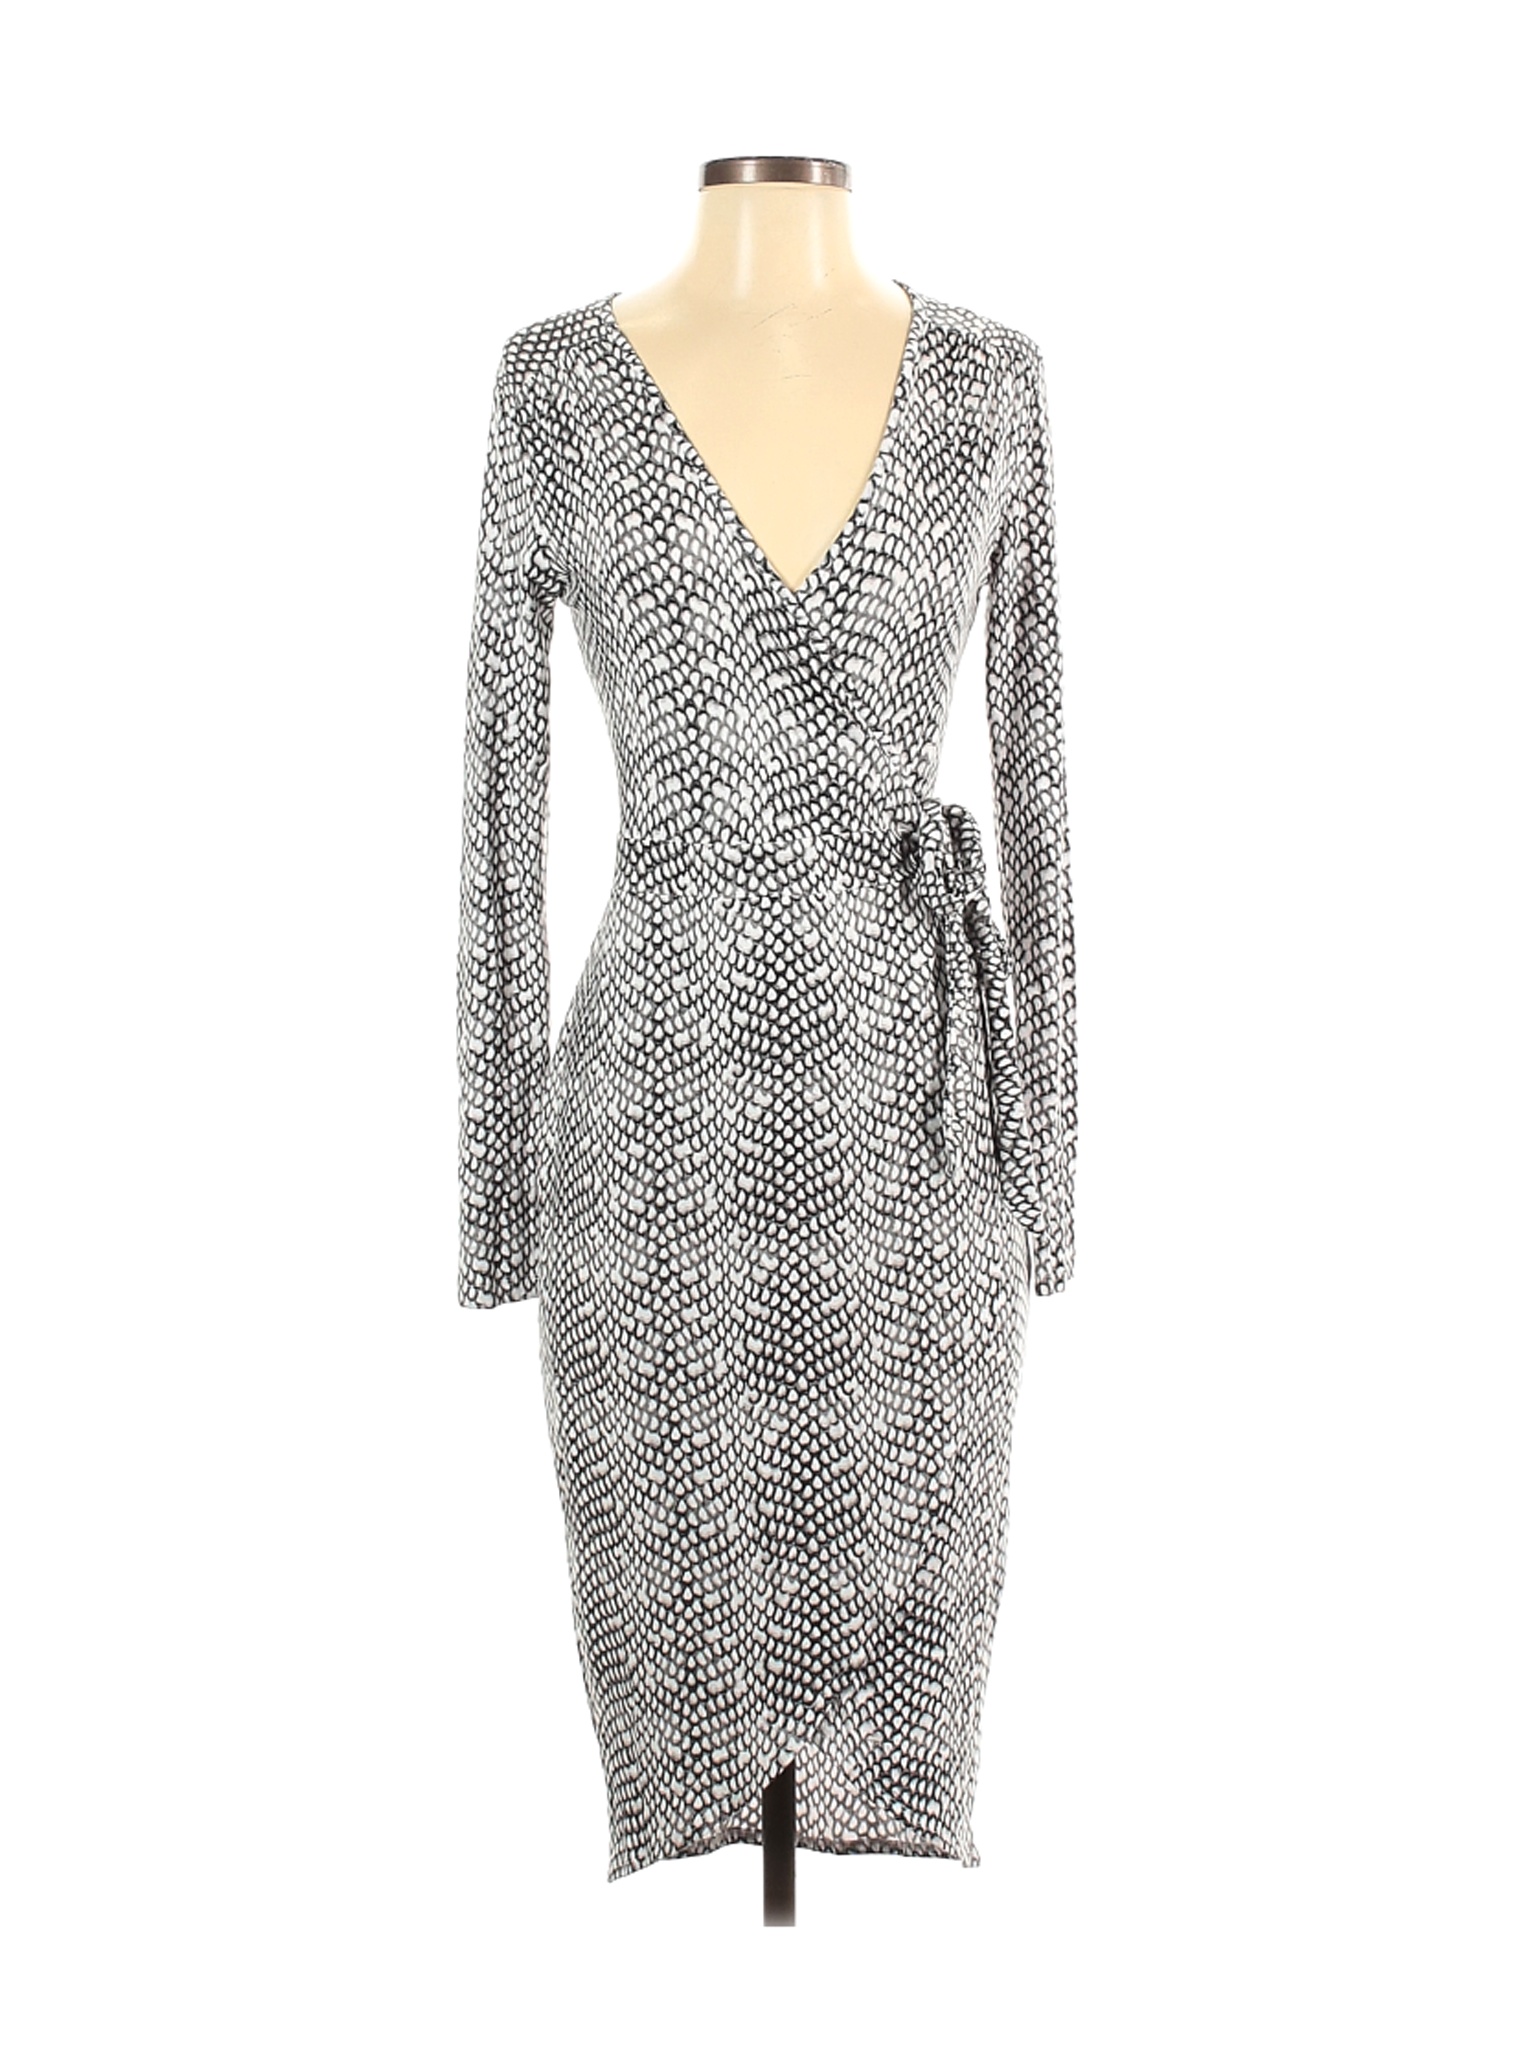 NWT Tart Women Gray Casual Dress S | eBay